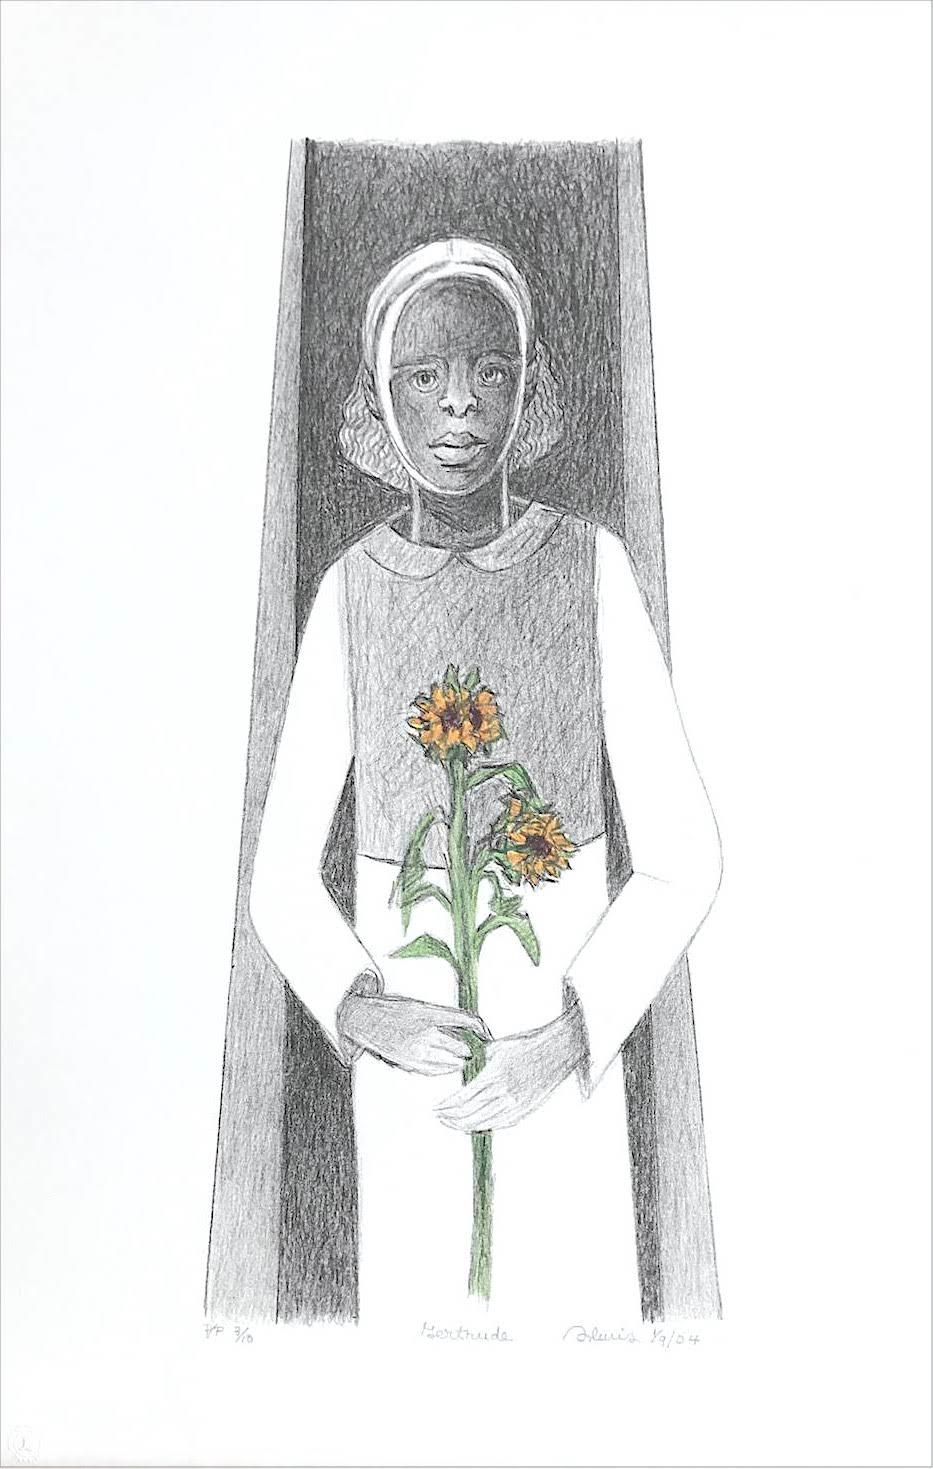 Samella Lewis Portrait Print - GERTRUDE Hand Drawn Lithograph, Young Black Girl Portrait, Sunflower